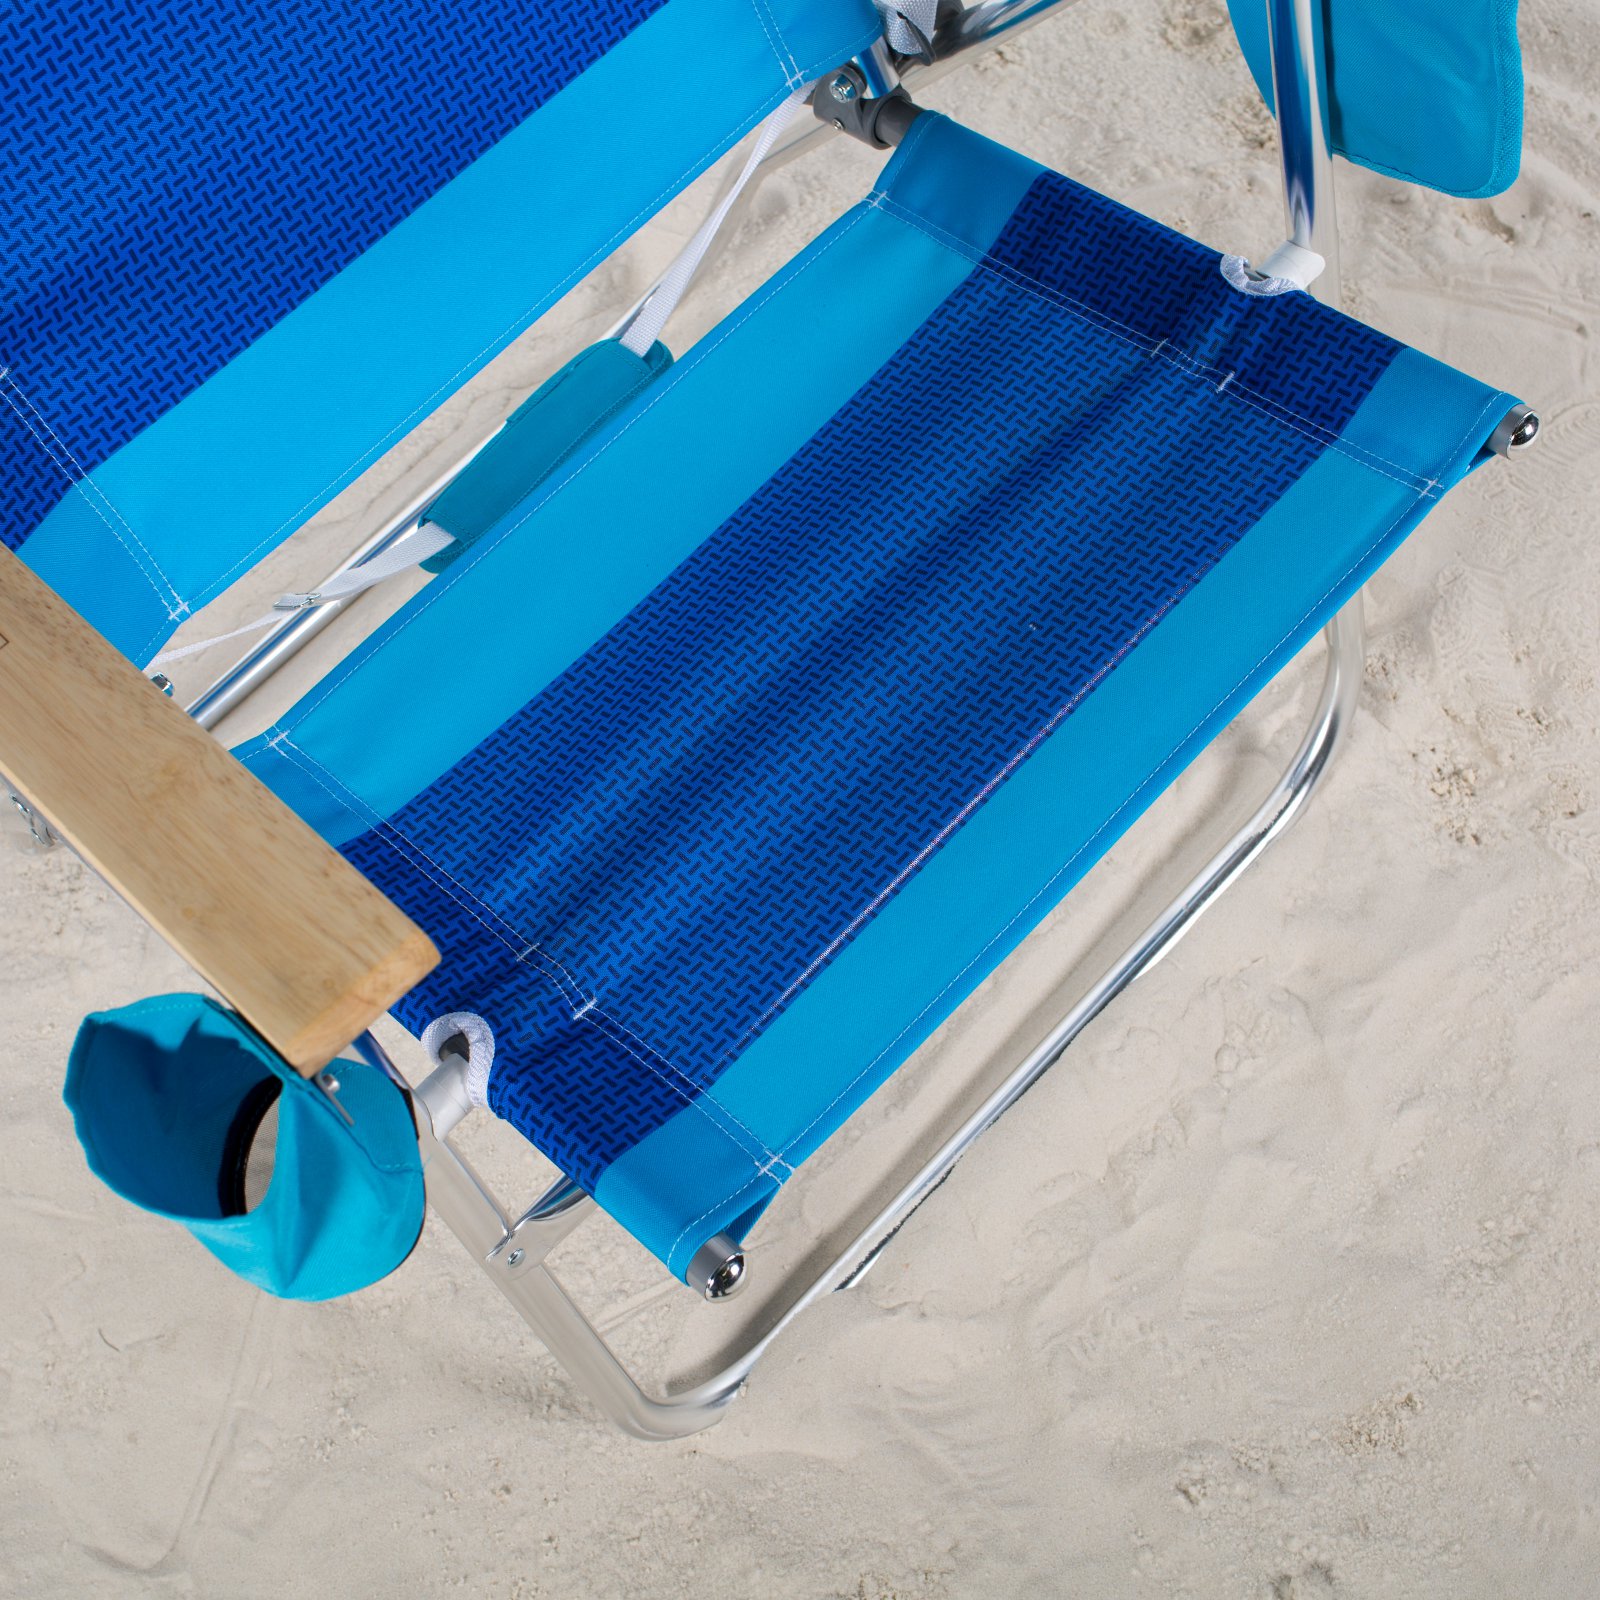 RIO Hi-Boy Lounge Aluminum Beach Chair - Multi-color - image 5 of 11